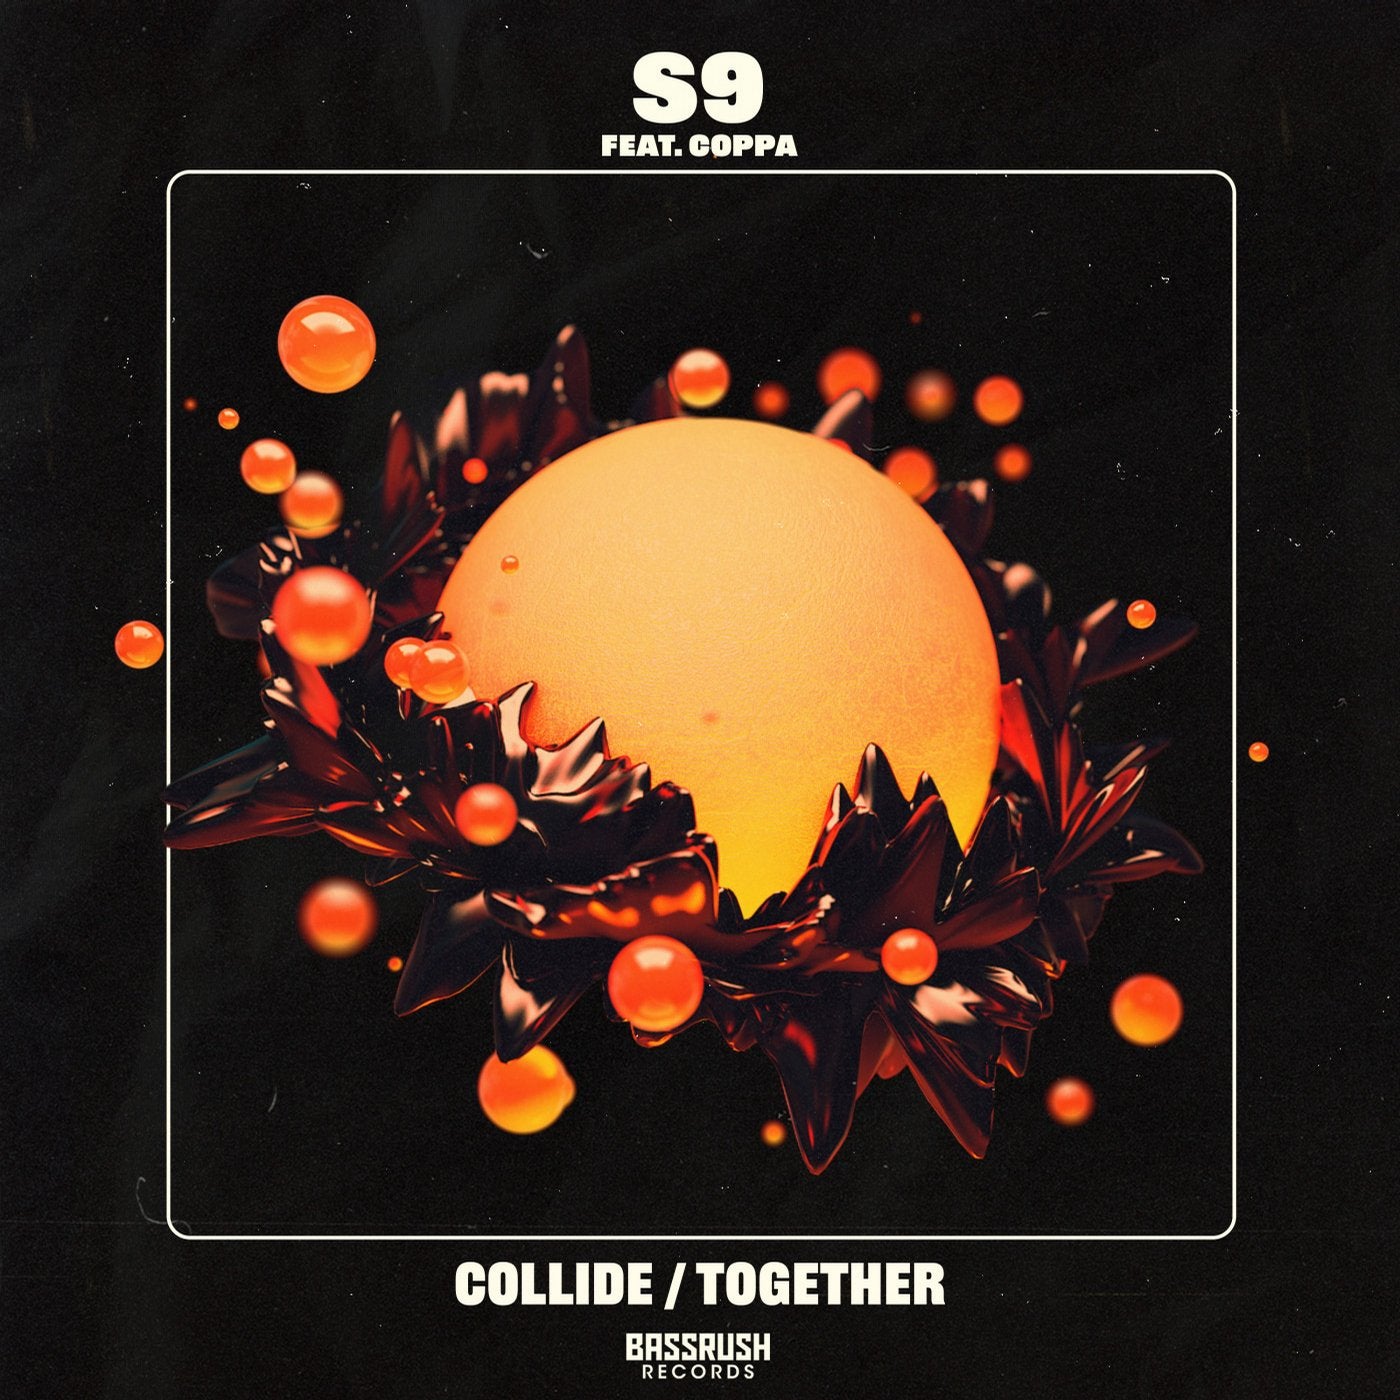 Collide / Together